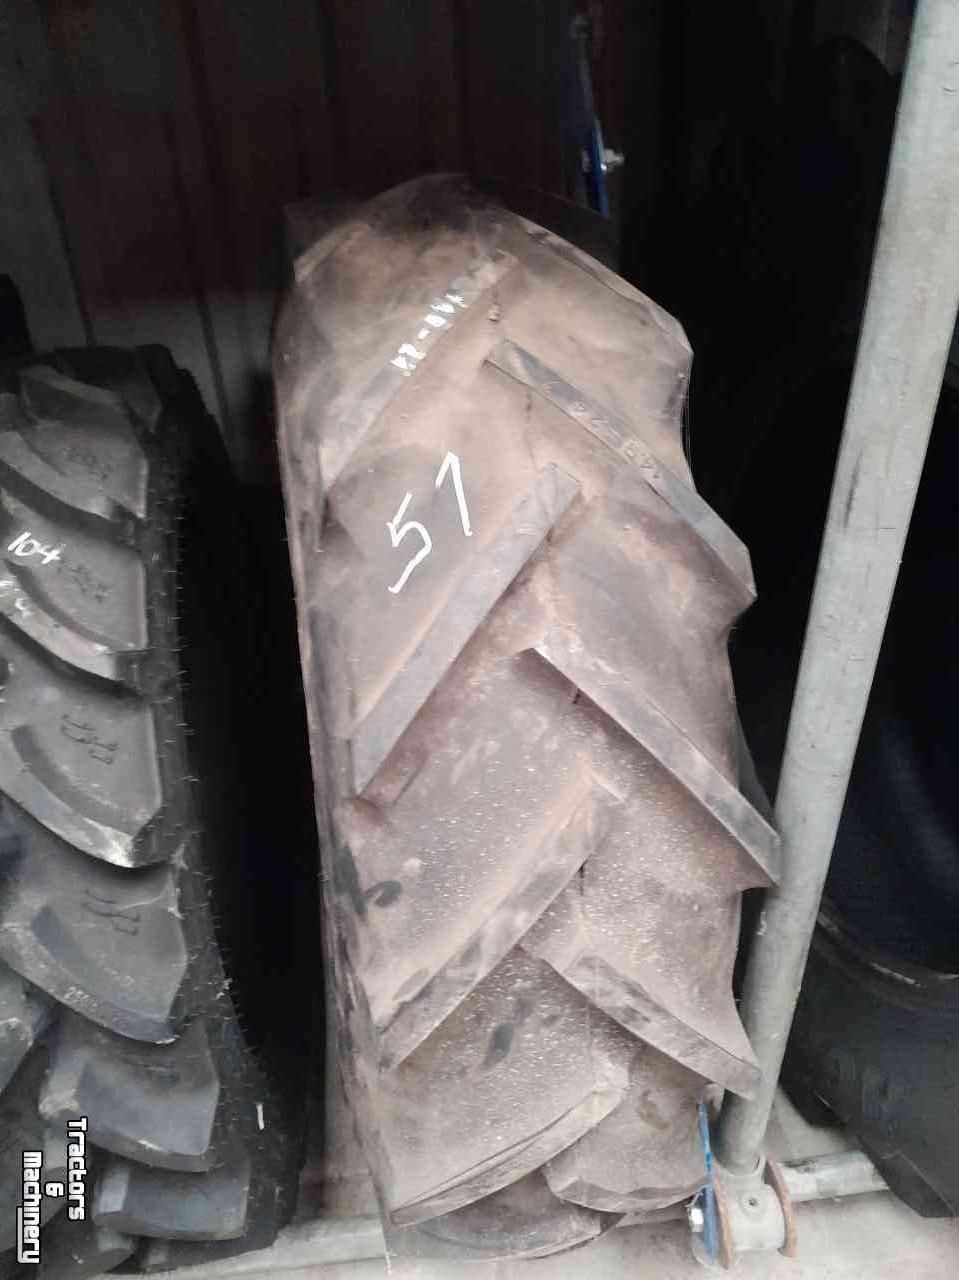 Wheels, Tyres, Rims & Dual spacers Stomil 14.9R24